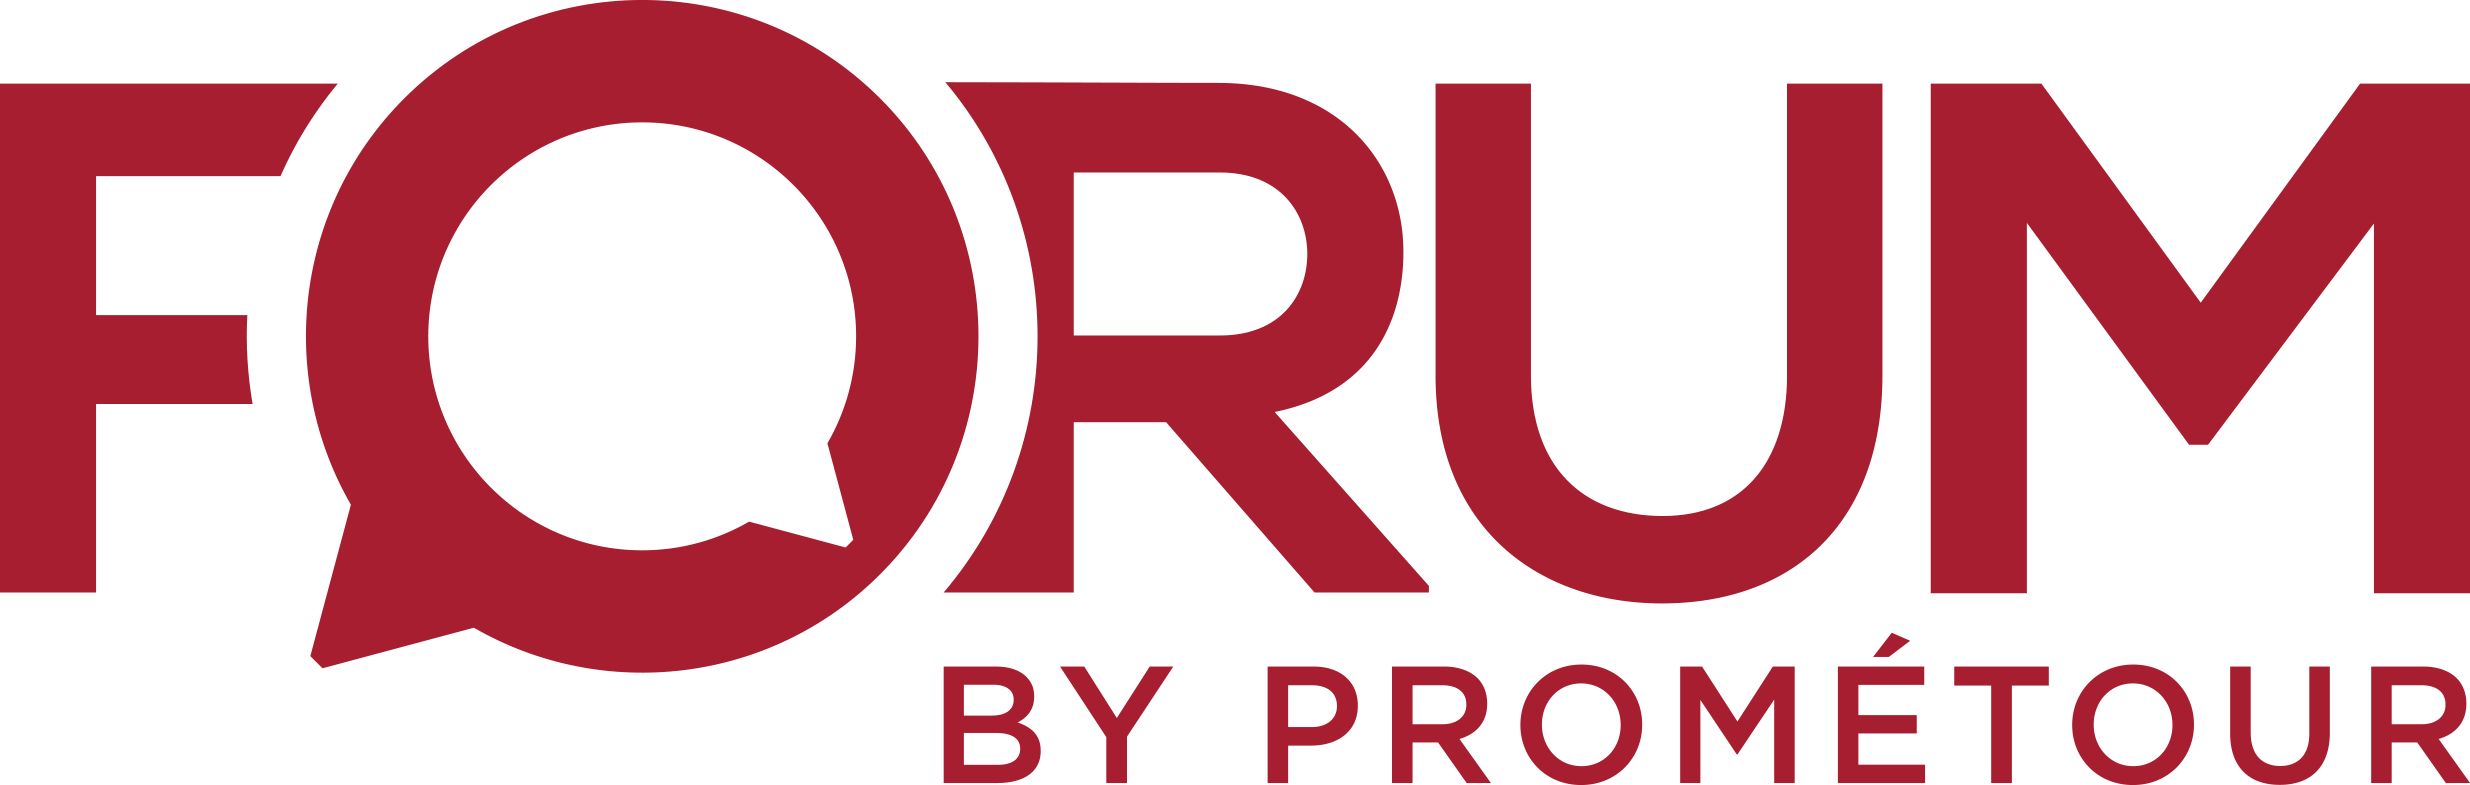 Forum by Prométour-logo.